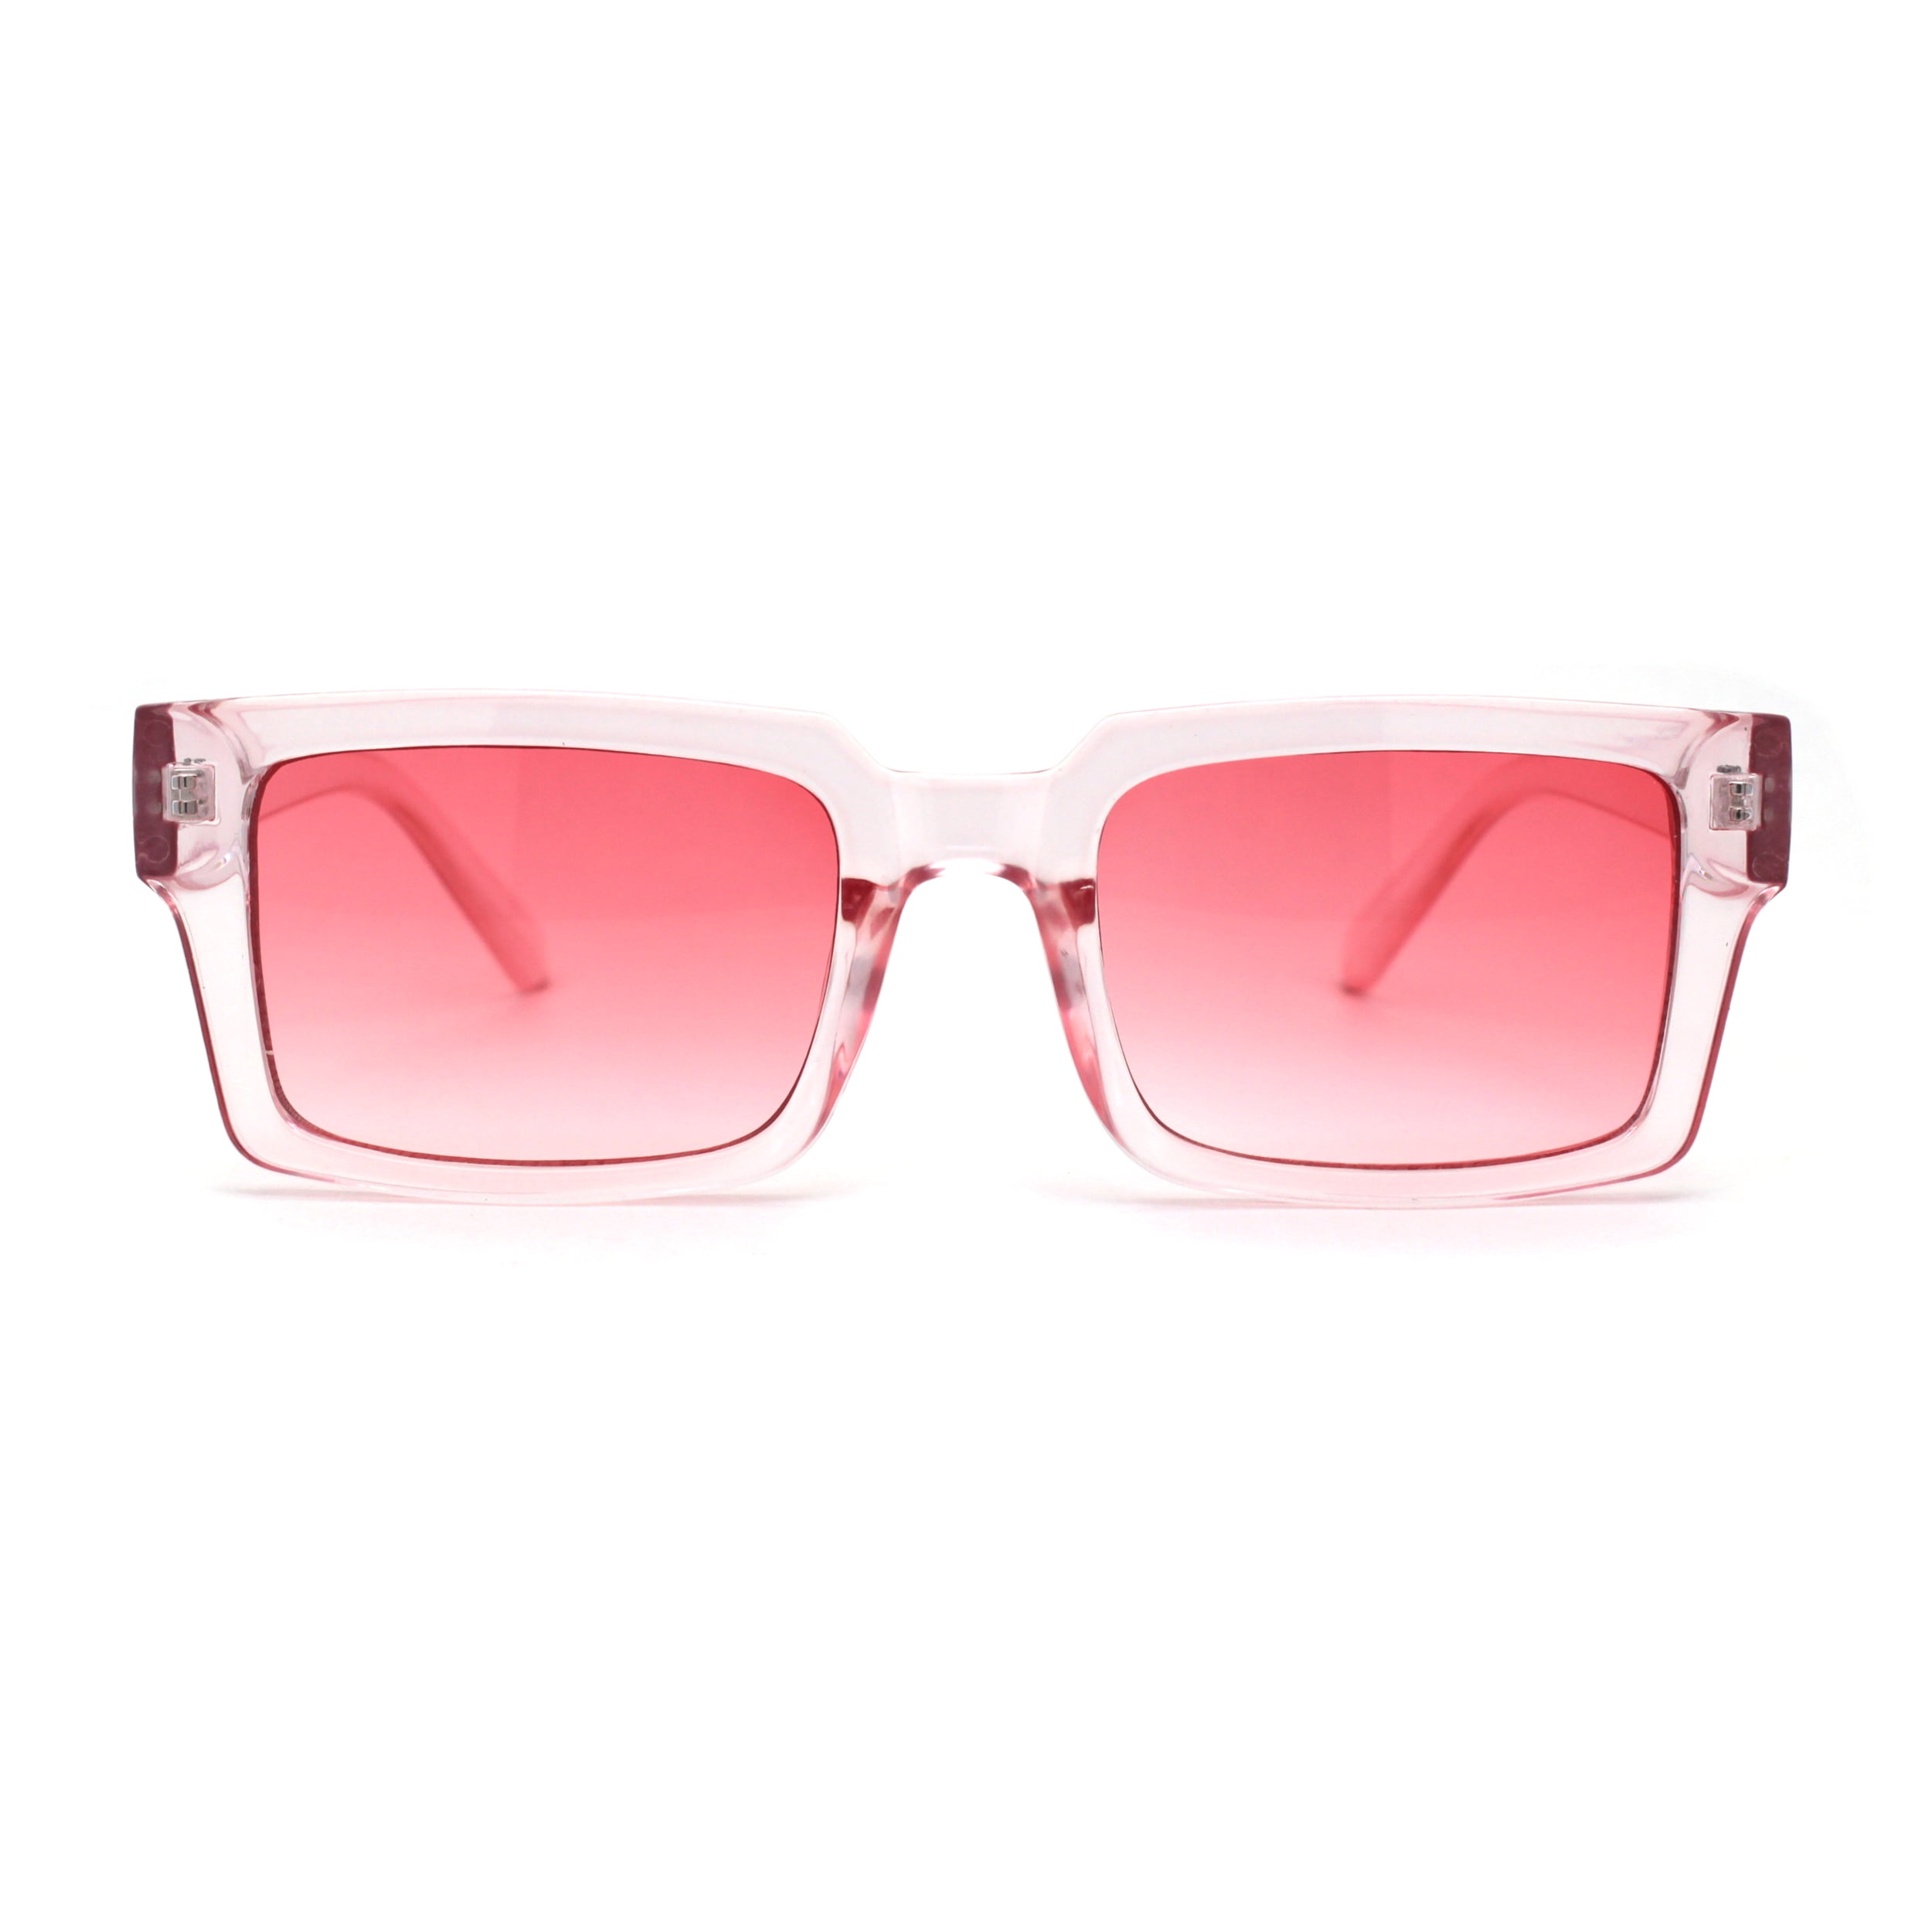 Horn Rim Oversize Sunglasses Dapper Fashion Top Bar Shade Men Women 